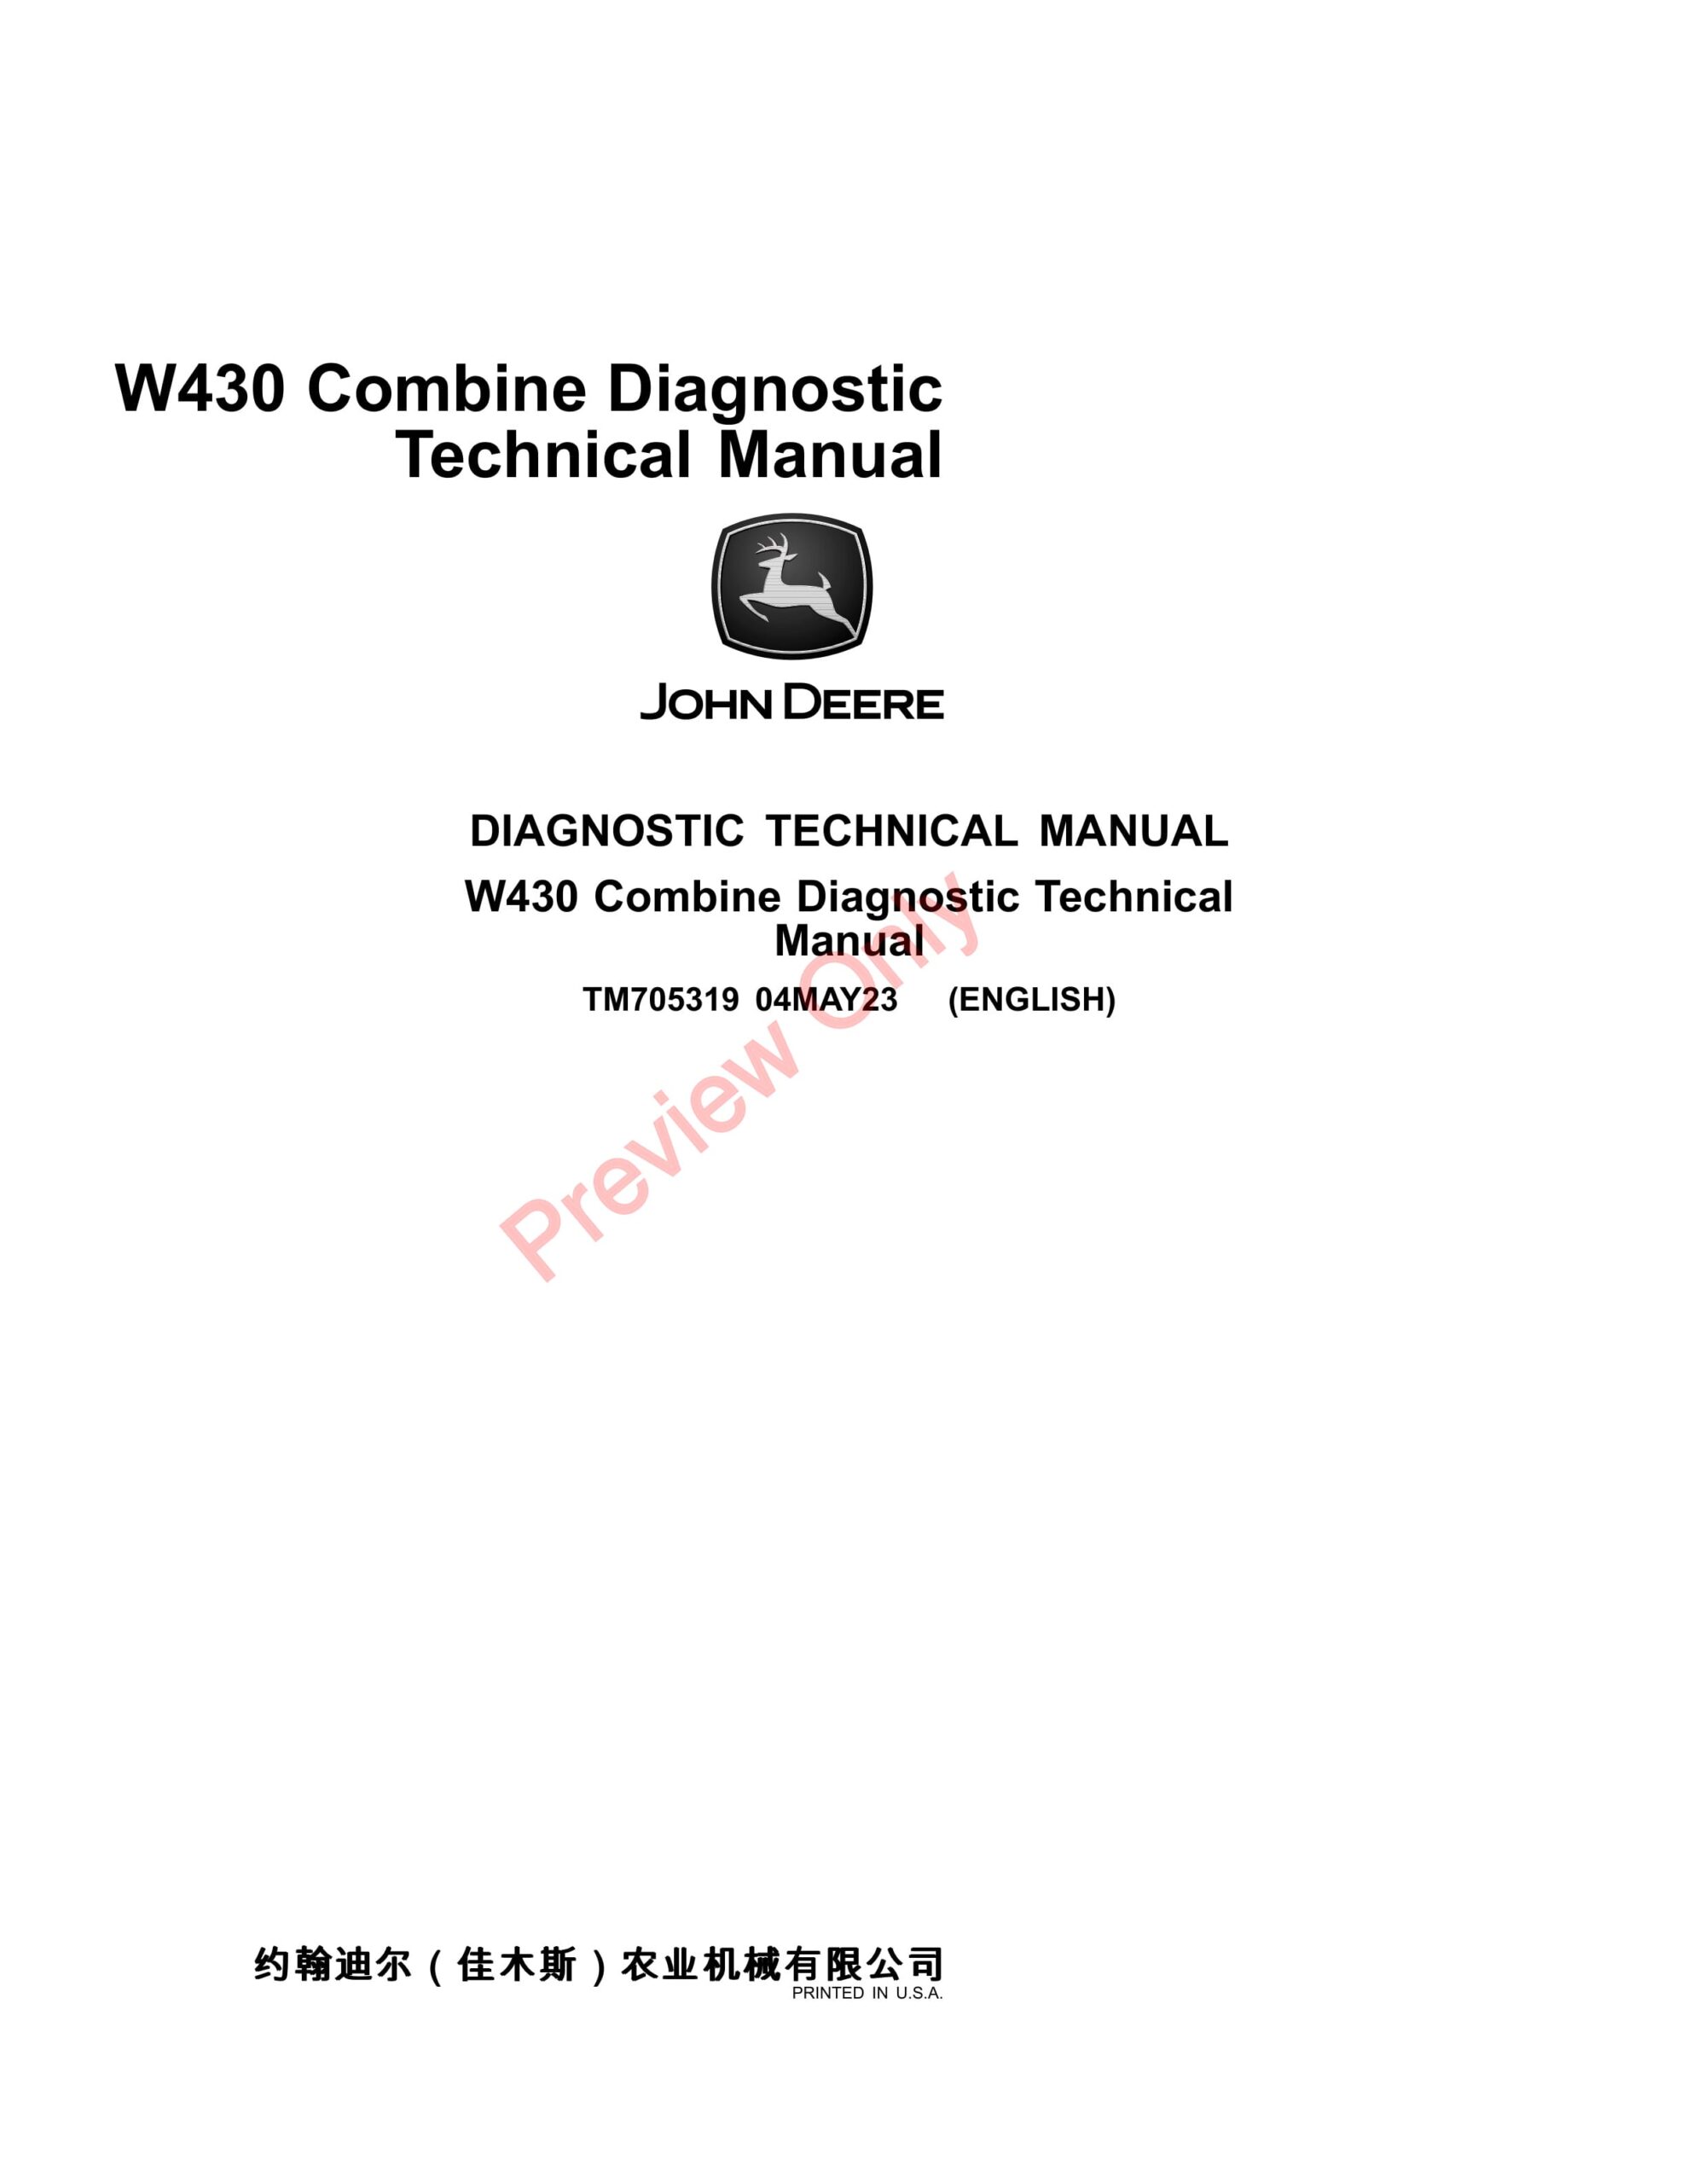 John Deere W430 Combine Diagnostic Technical Manual TM705319 04MAY23-1